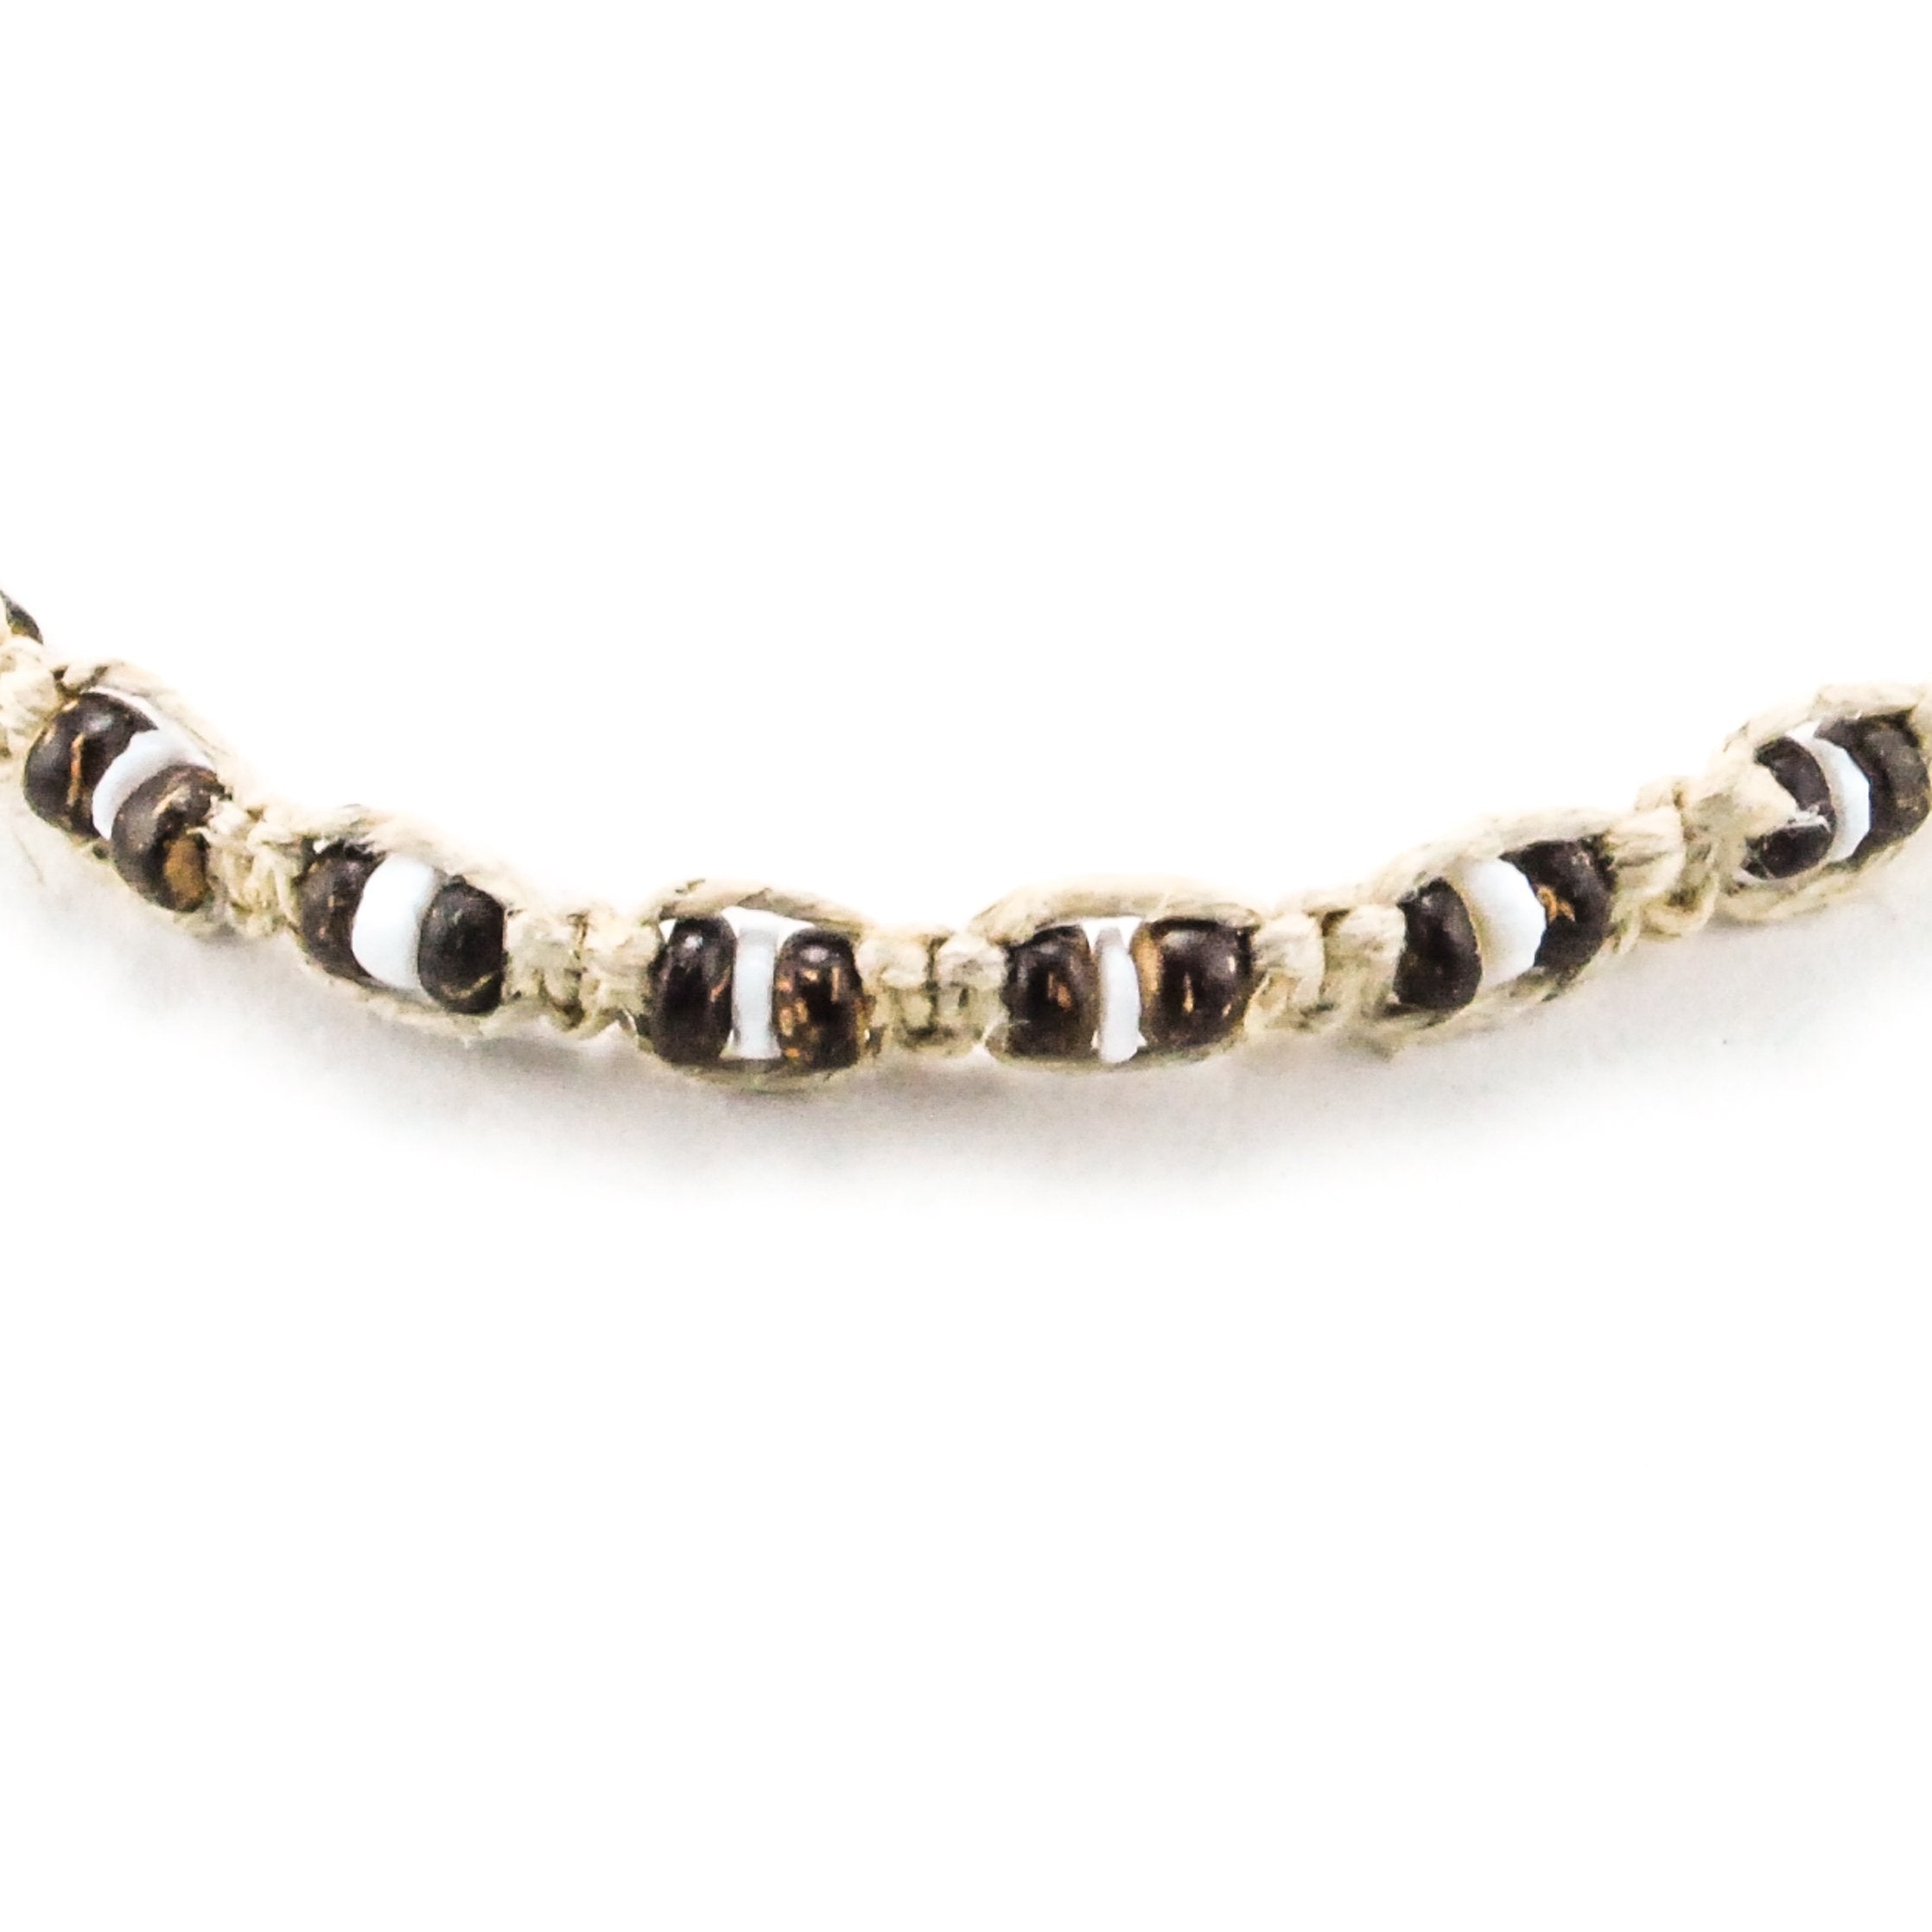 Brown Coconut Beads and Puka Shells on Hemp Choker Necklace